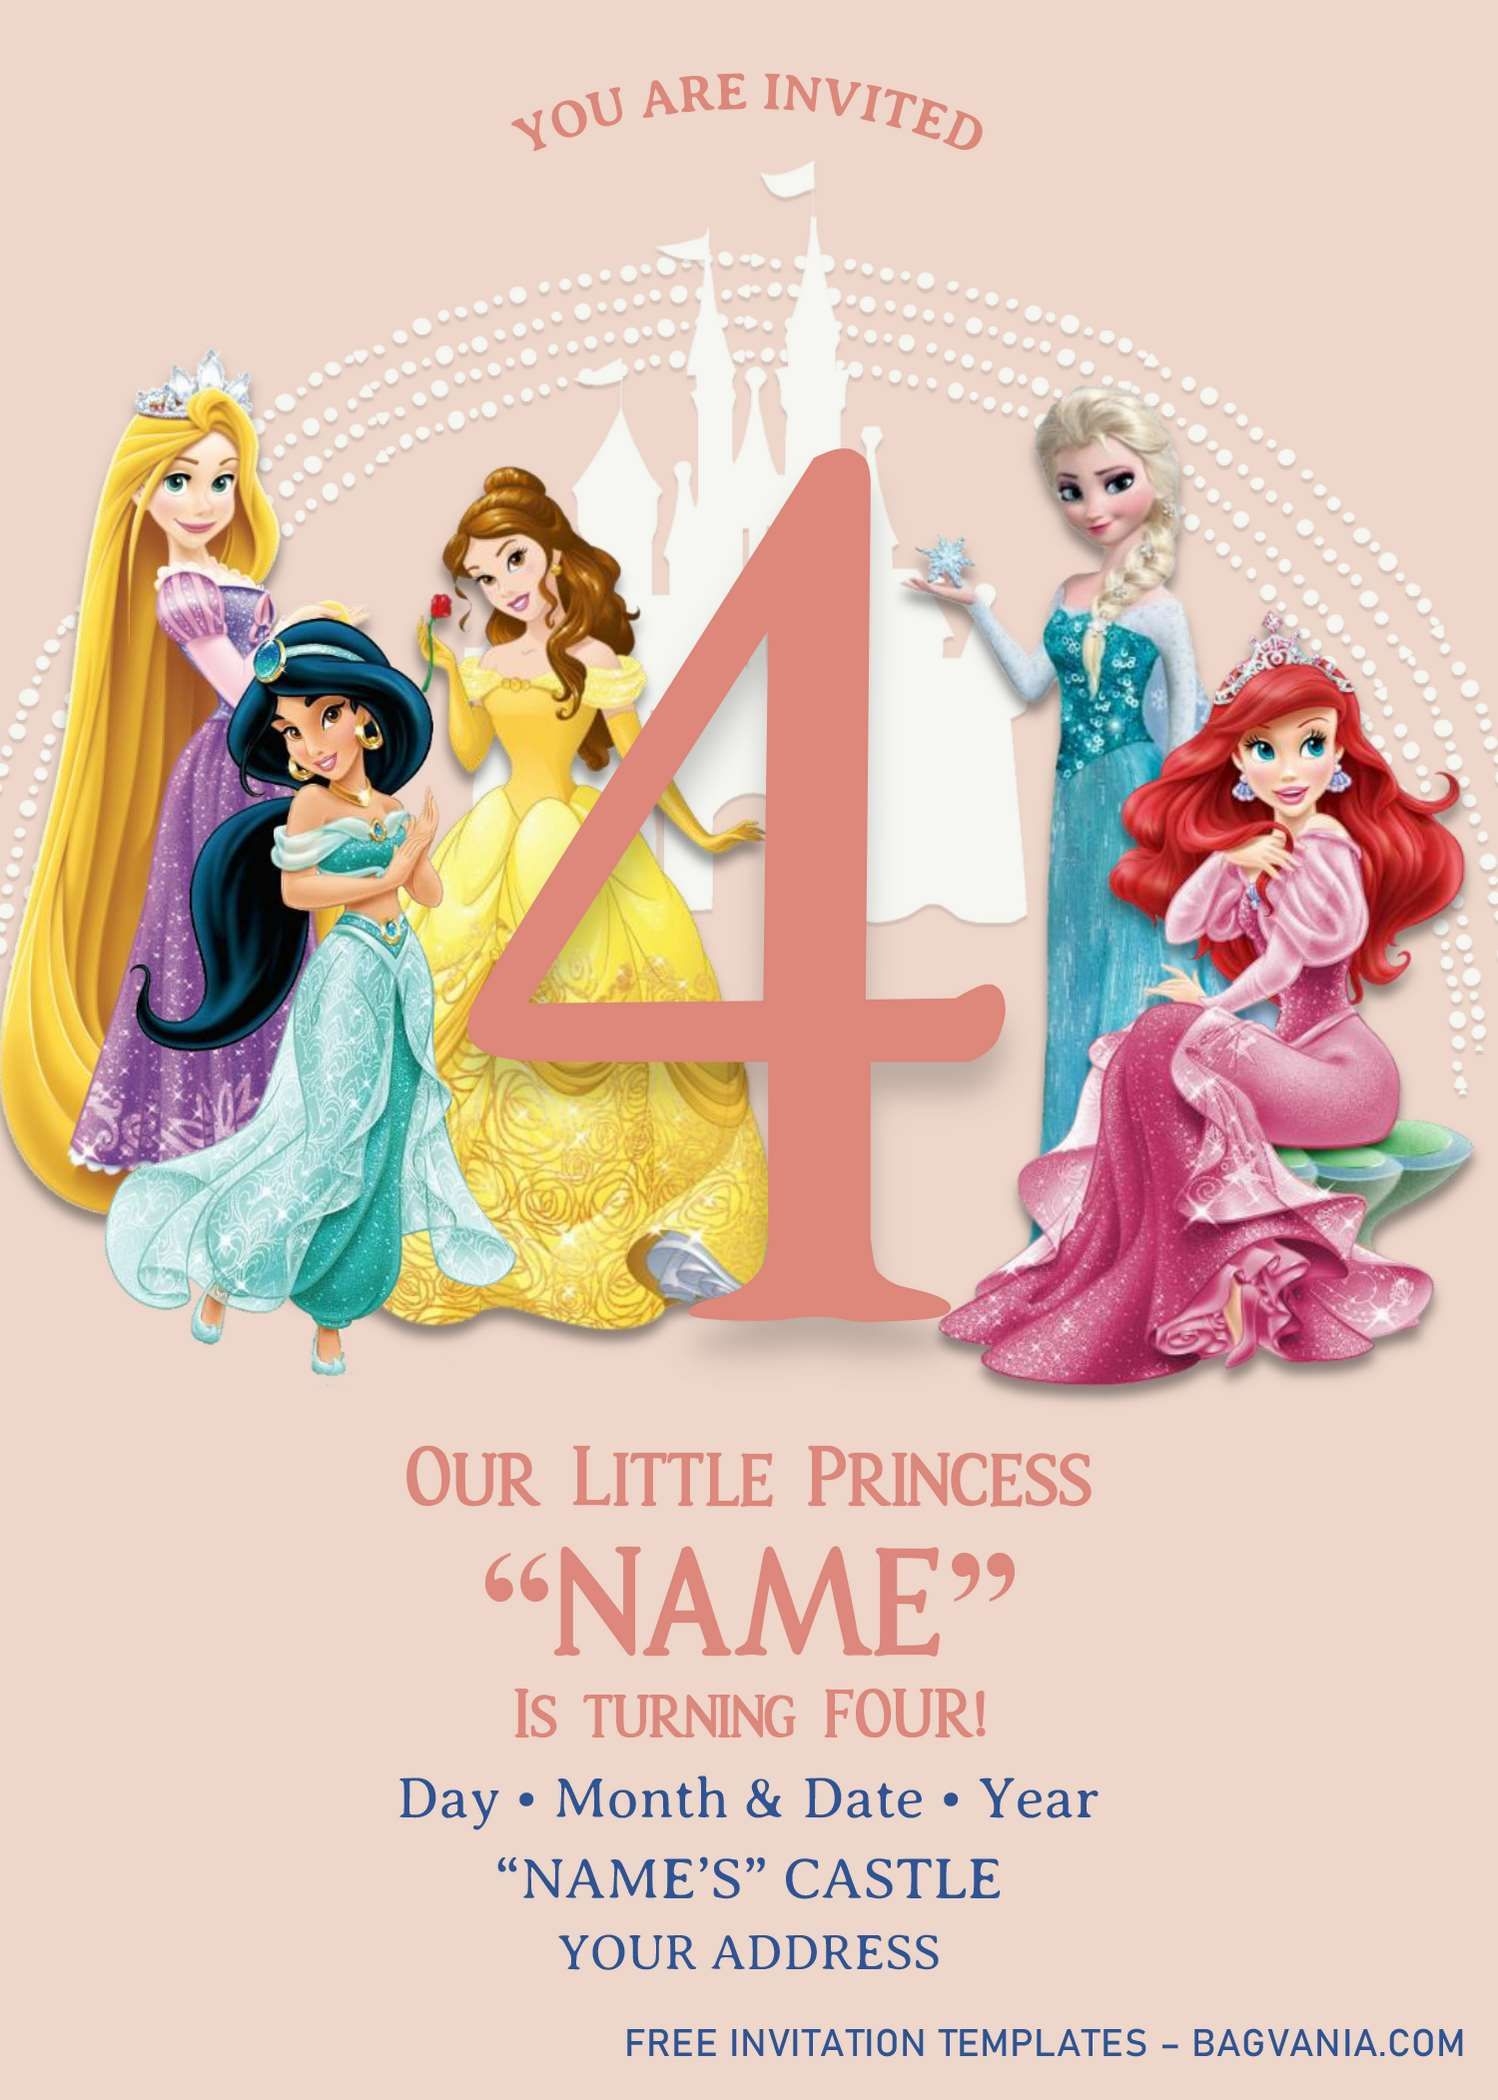 Disney Princess Birthday Invitation Templates Editable With Princess Birthday Invitations Princess Birthday Party Invitations Disney Princess Birthday Party - Disney Princess Birthday Invitations Free Printable